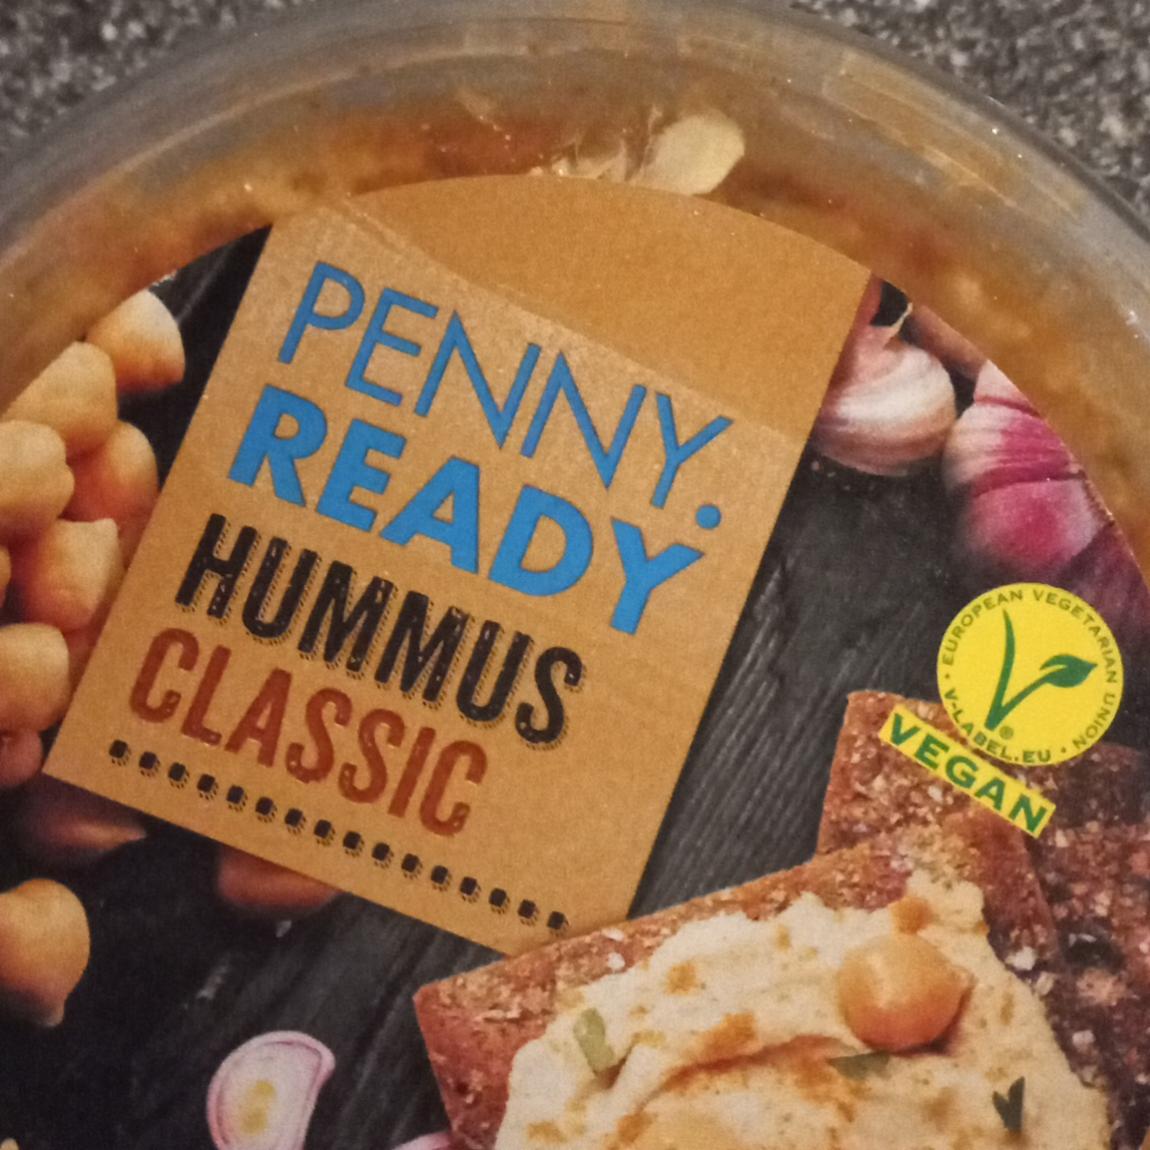 Fotografie - Hummus classic Penny ready